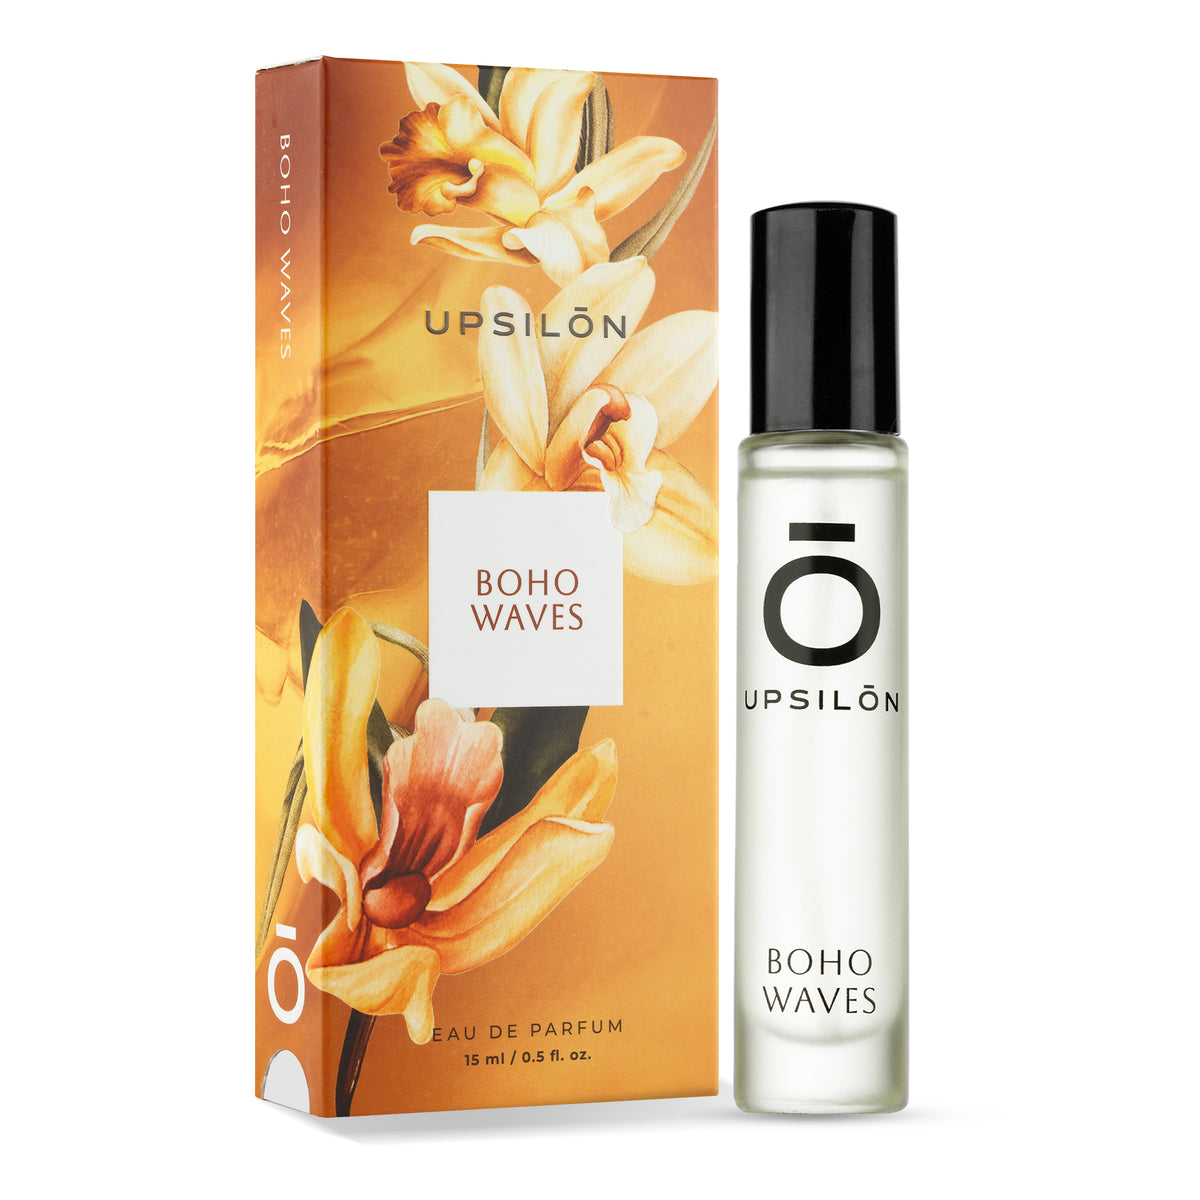 Feminine fragrance, UPSILON Boho Waves Eau de Parfum, in a travel-size 15ml bottle